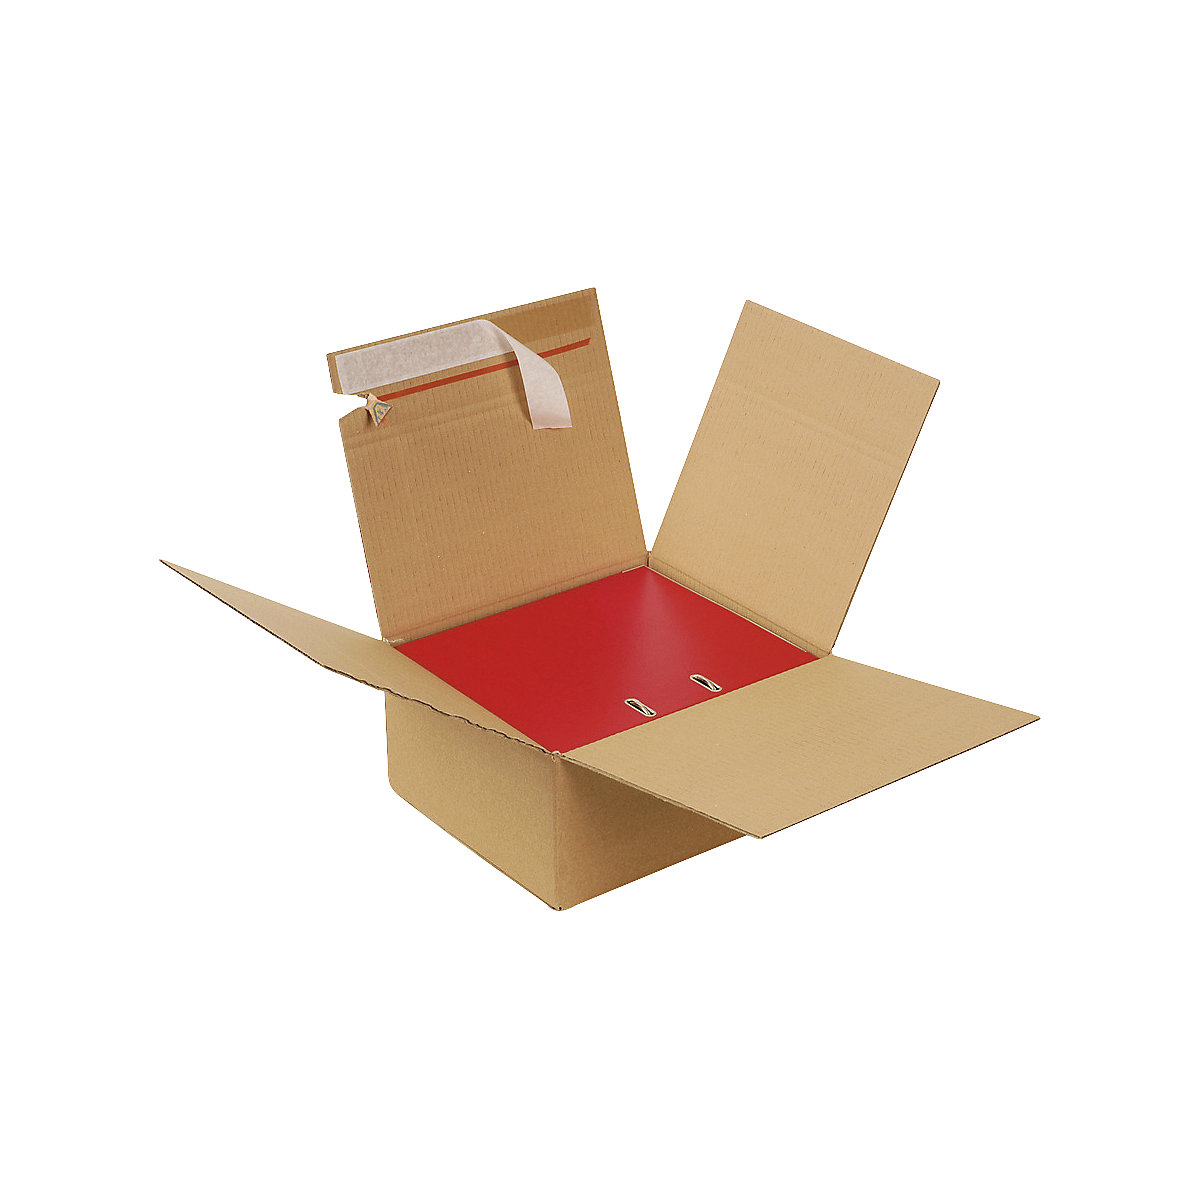 Ordner-Karton, Format A4, Selbstklebeverschluss, Innenmaße 330 x 290 x 148 mm, ab 10 Stk